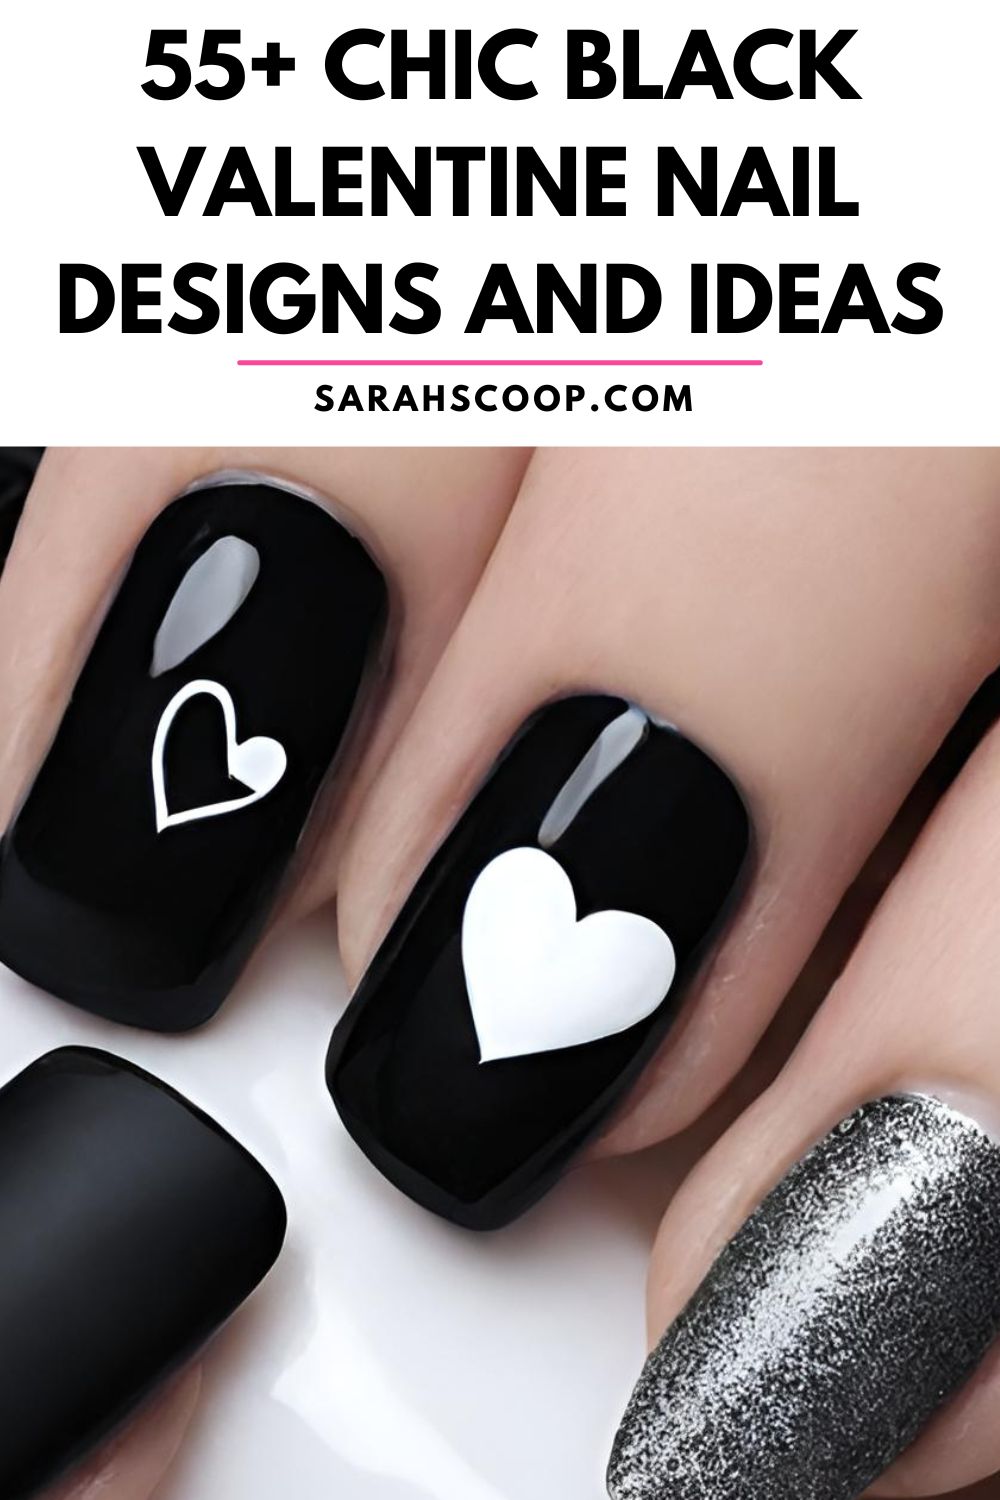 55+ Chic Black Valentine Nail Designs and Ideas